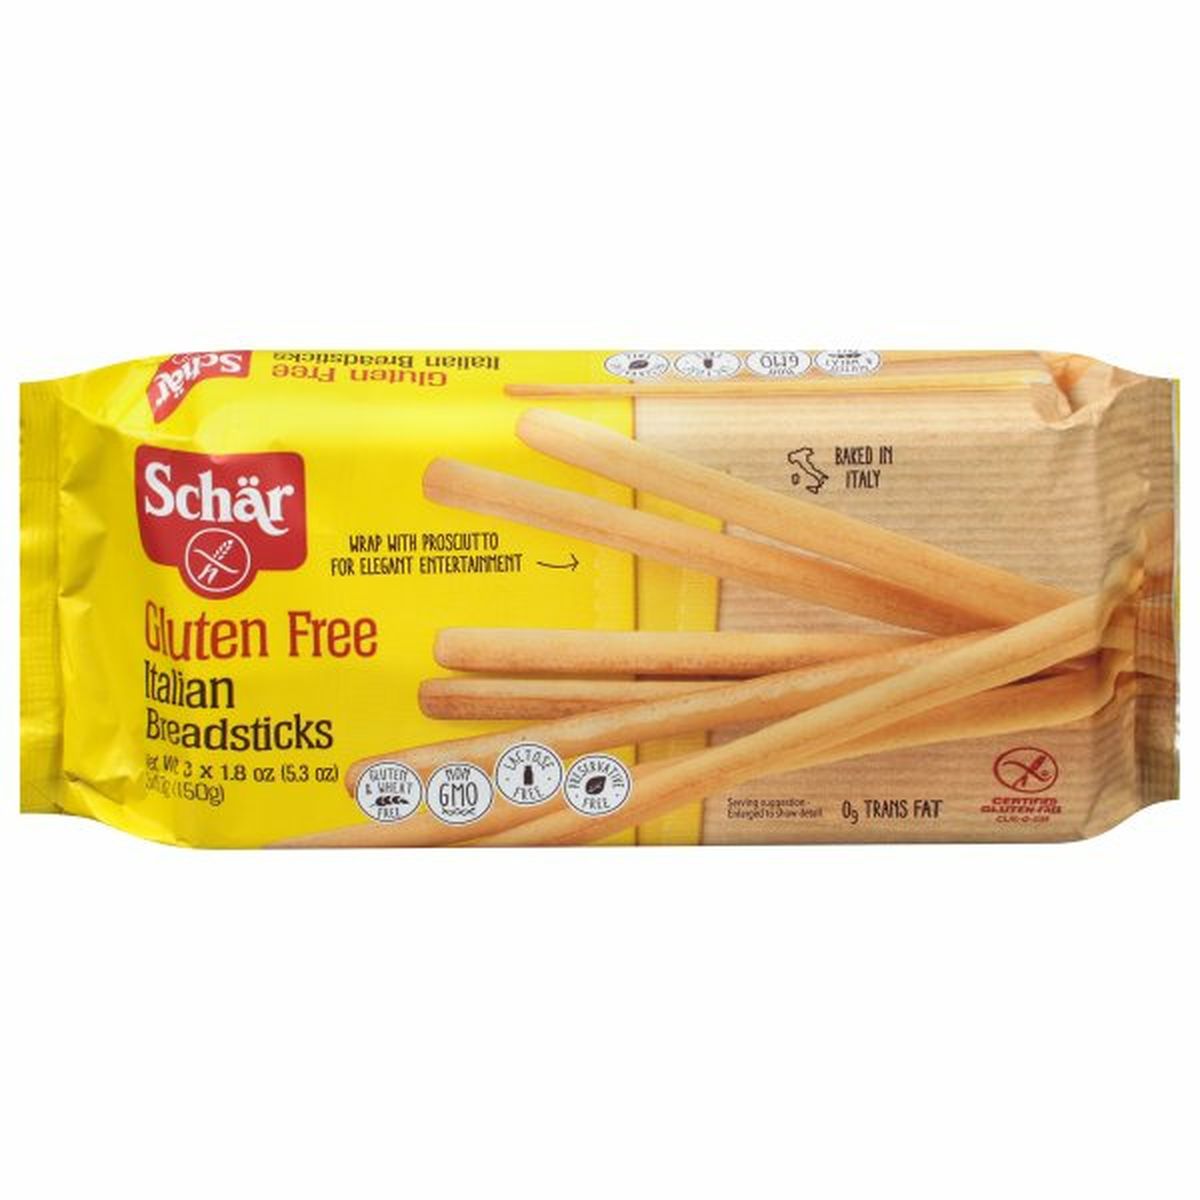 Calories in Schar Breadsticks, Italian, Gluten Free